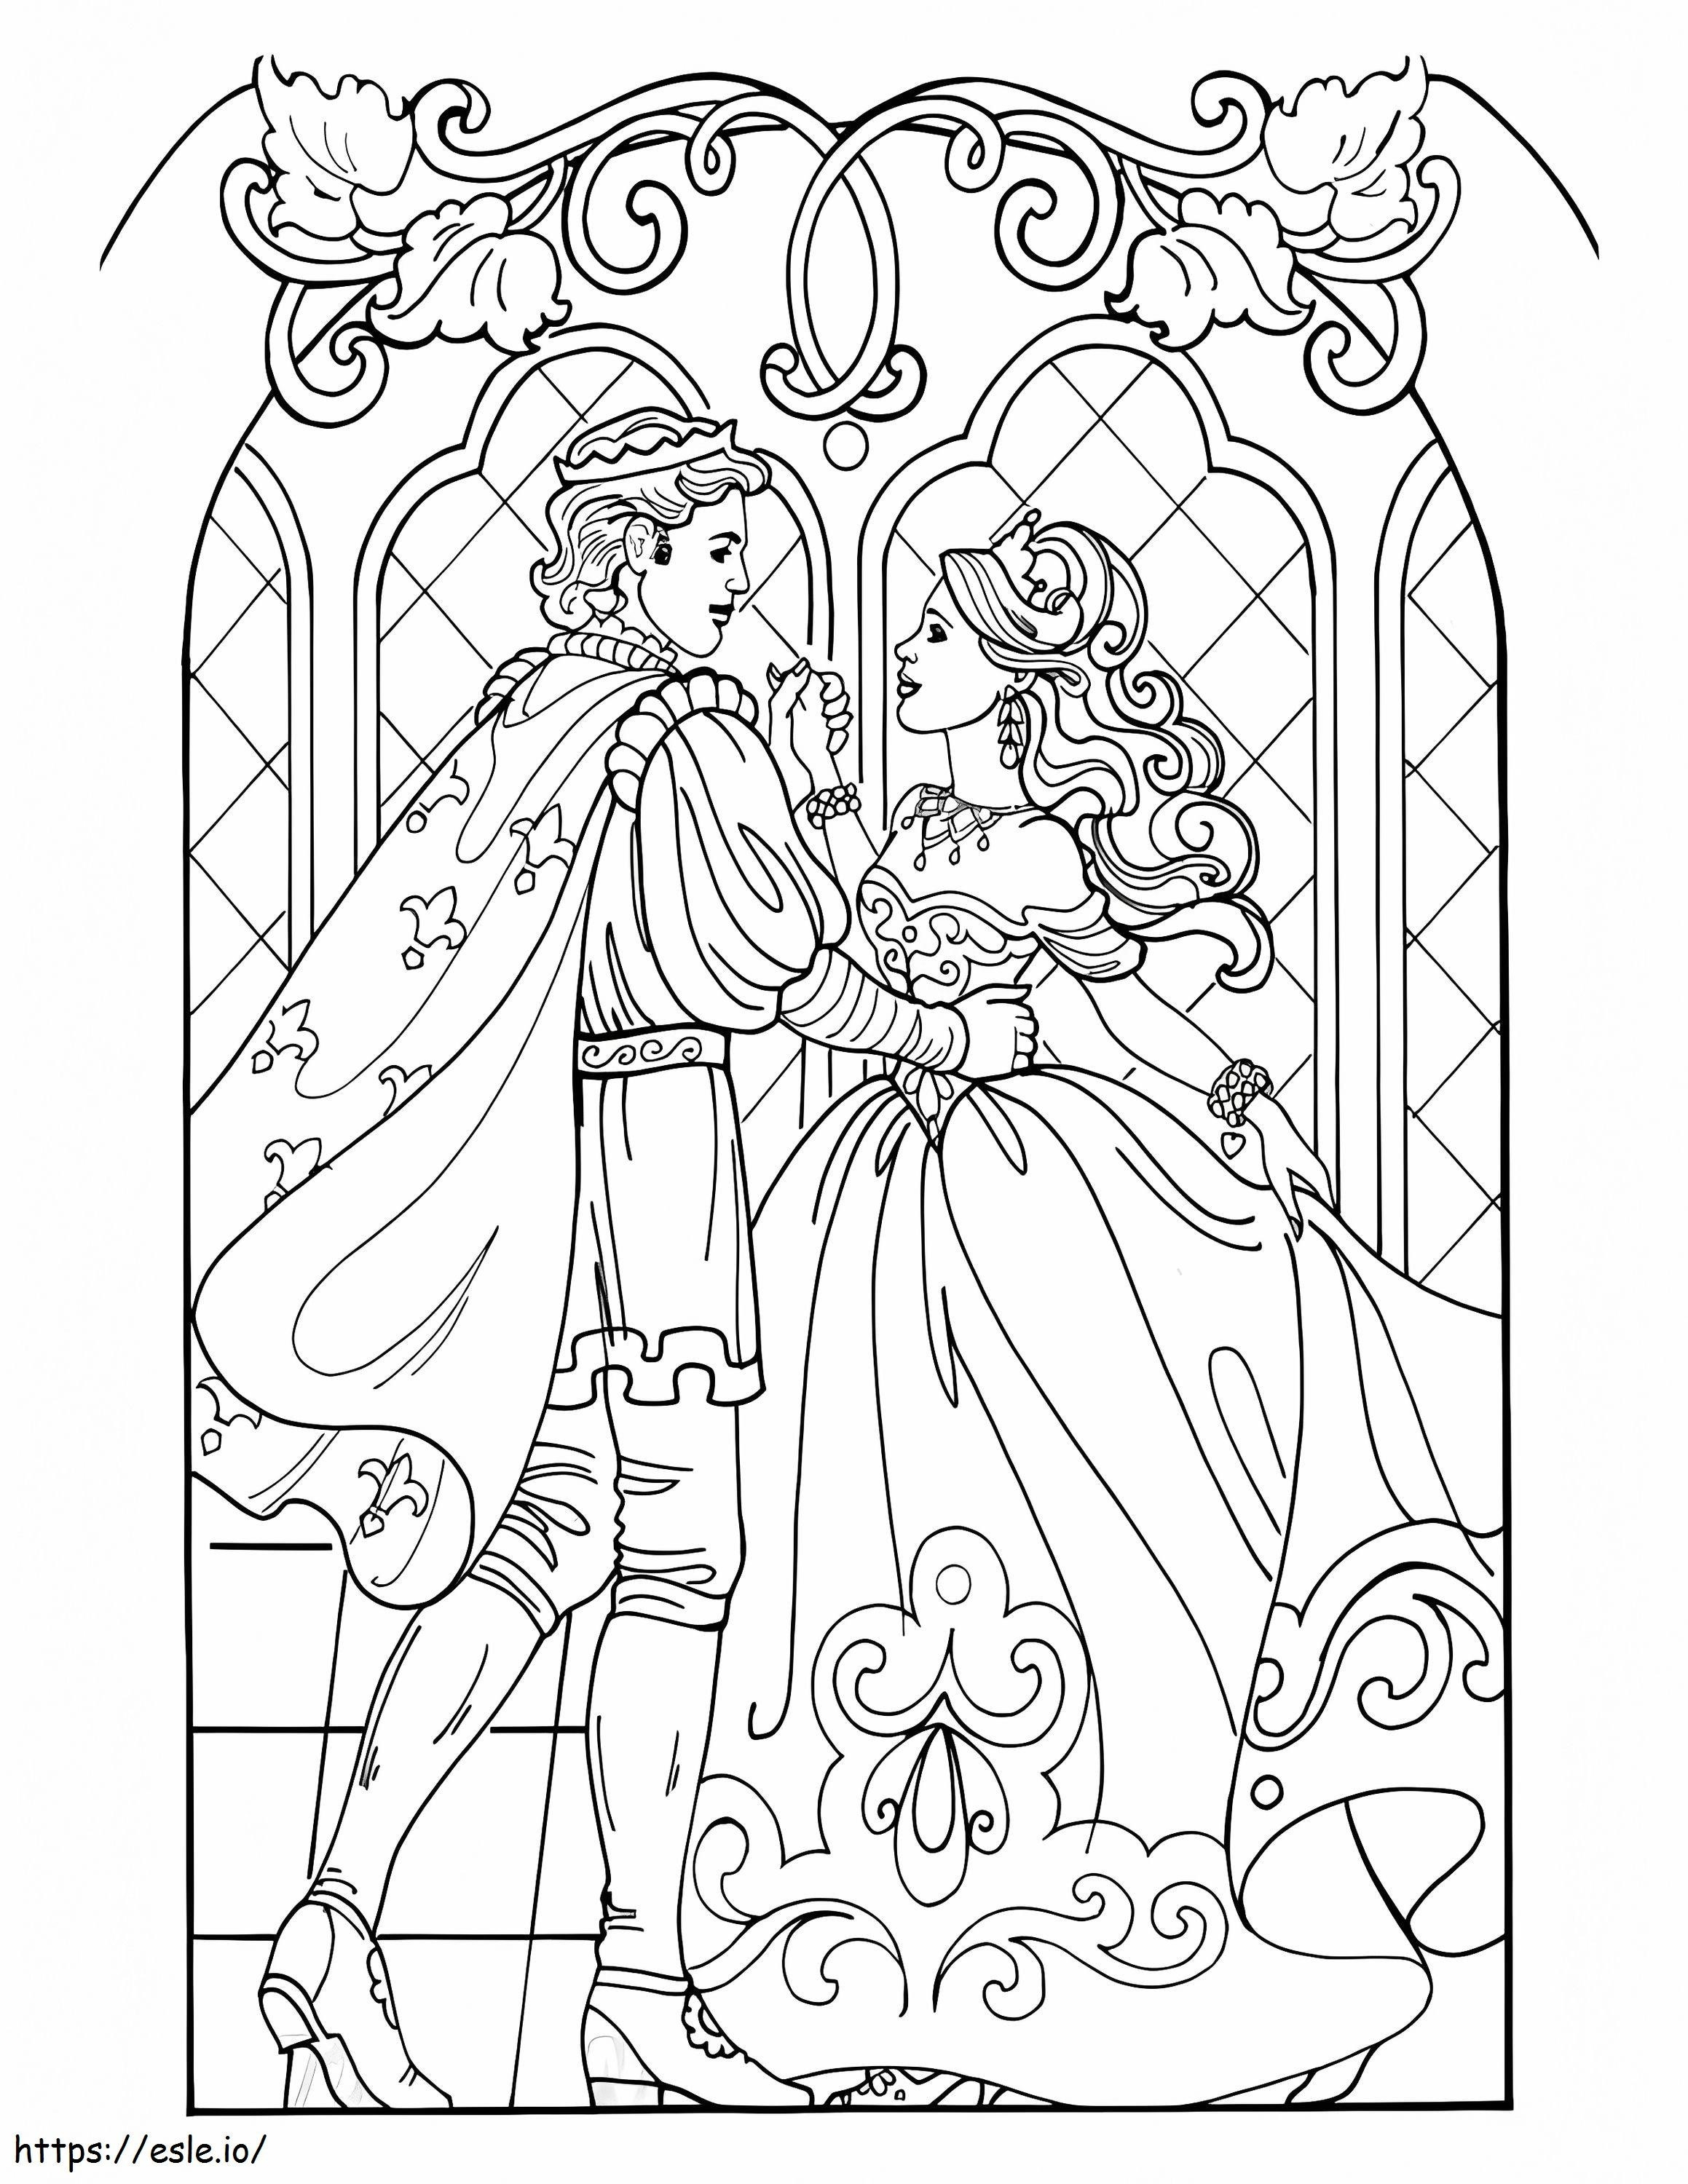 Princesa Leonora e Príncipe para colorir